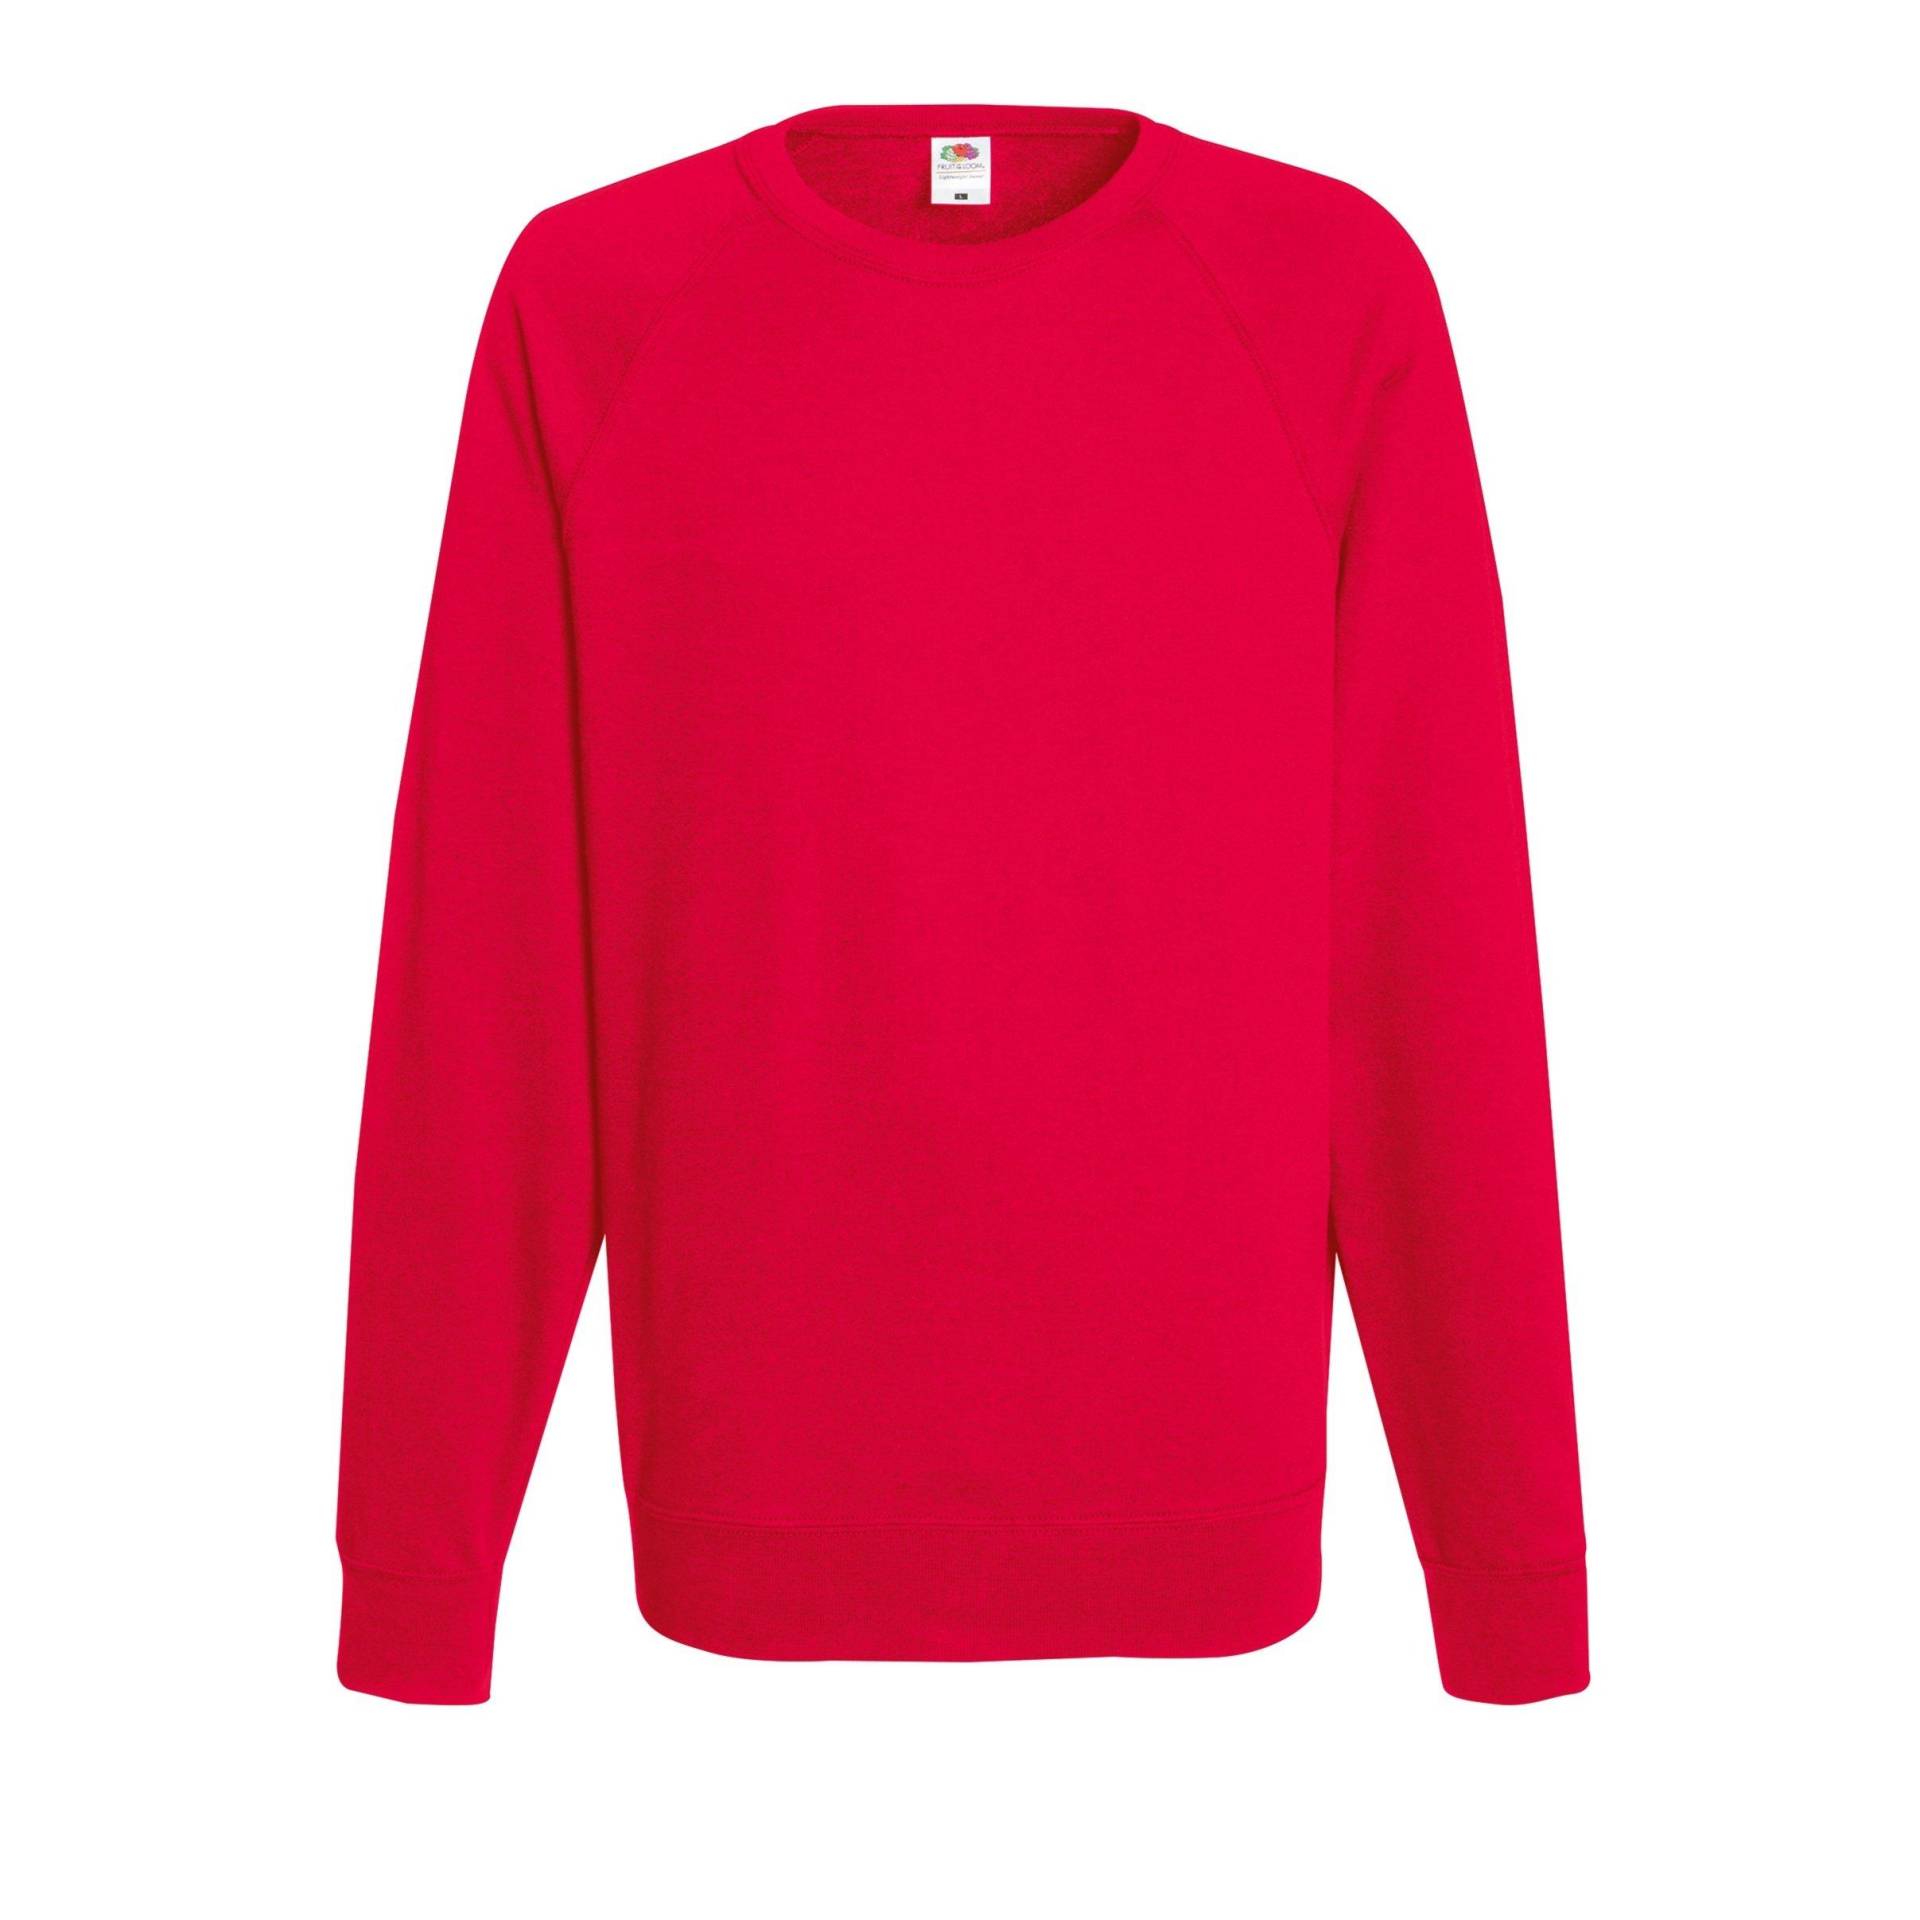 Leichte Raglan-sweatshirt (240 Gsm) Herren Rot Bunt XXL